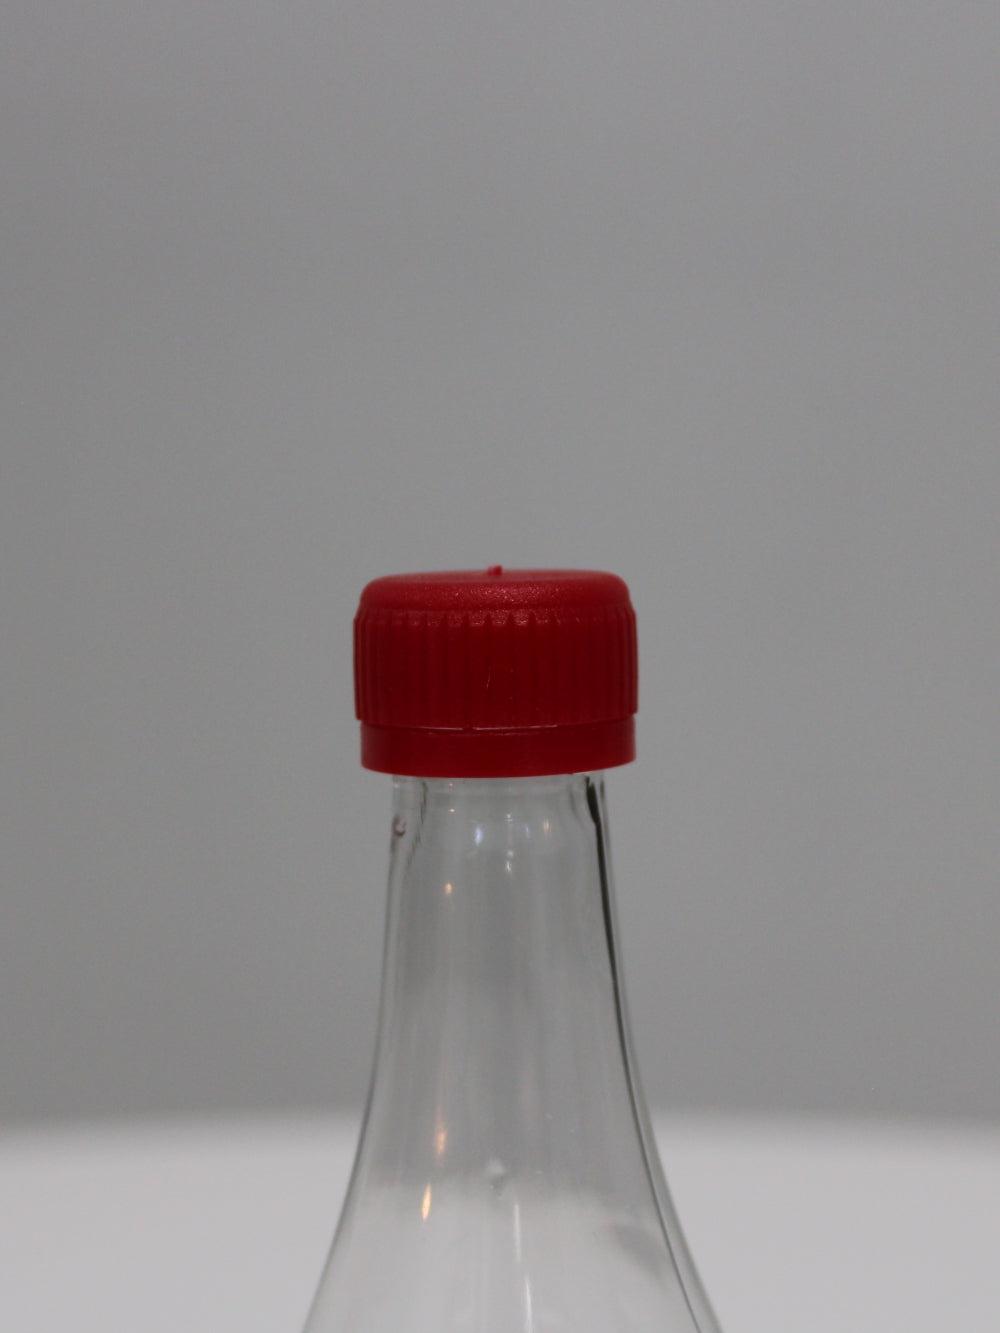 30ml Boston Tall PET Bottle - (Box of 1 000 units) - Packnet SA